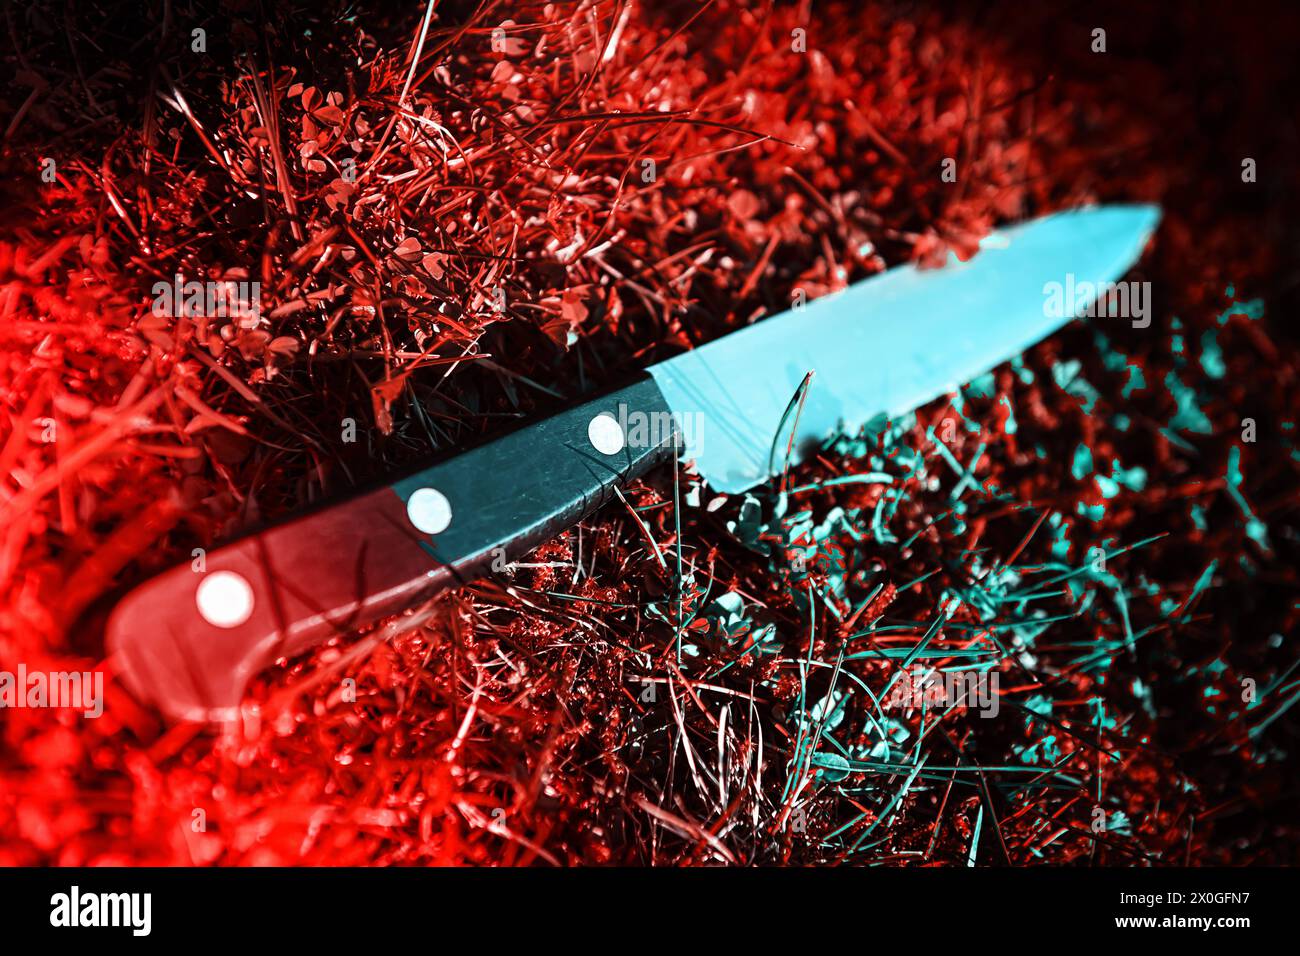 Messer liegt auf Rasen, Symbolfoto Kriminalität *** Knife lying on lawn, symbolic photo crime Stock Photo